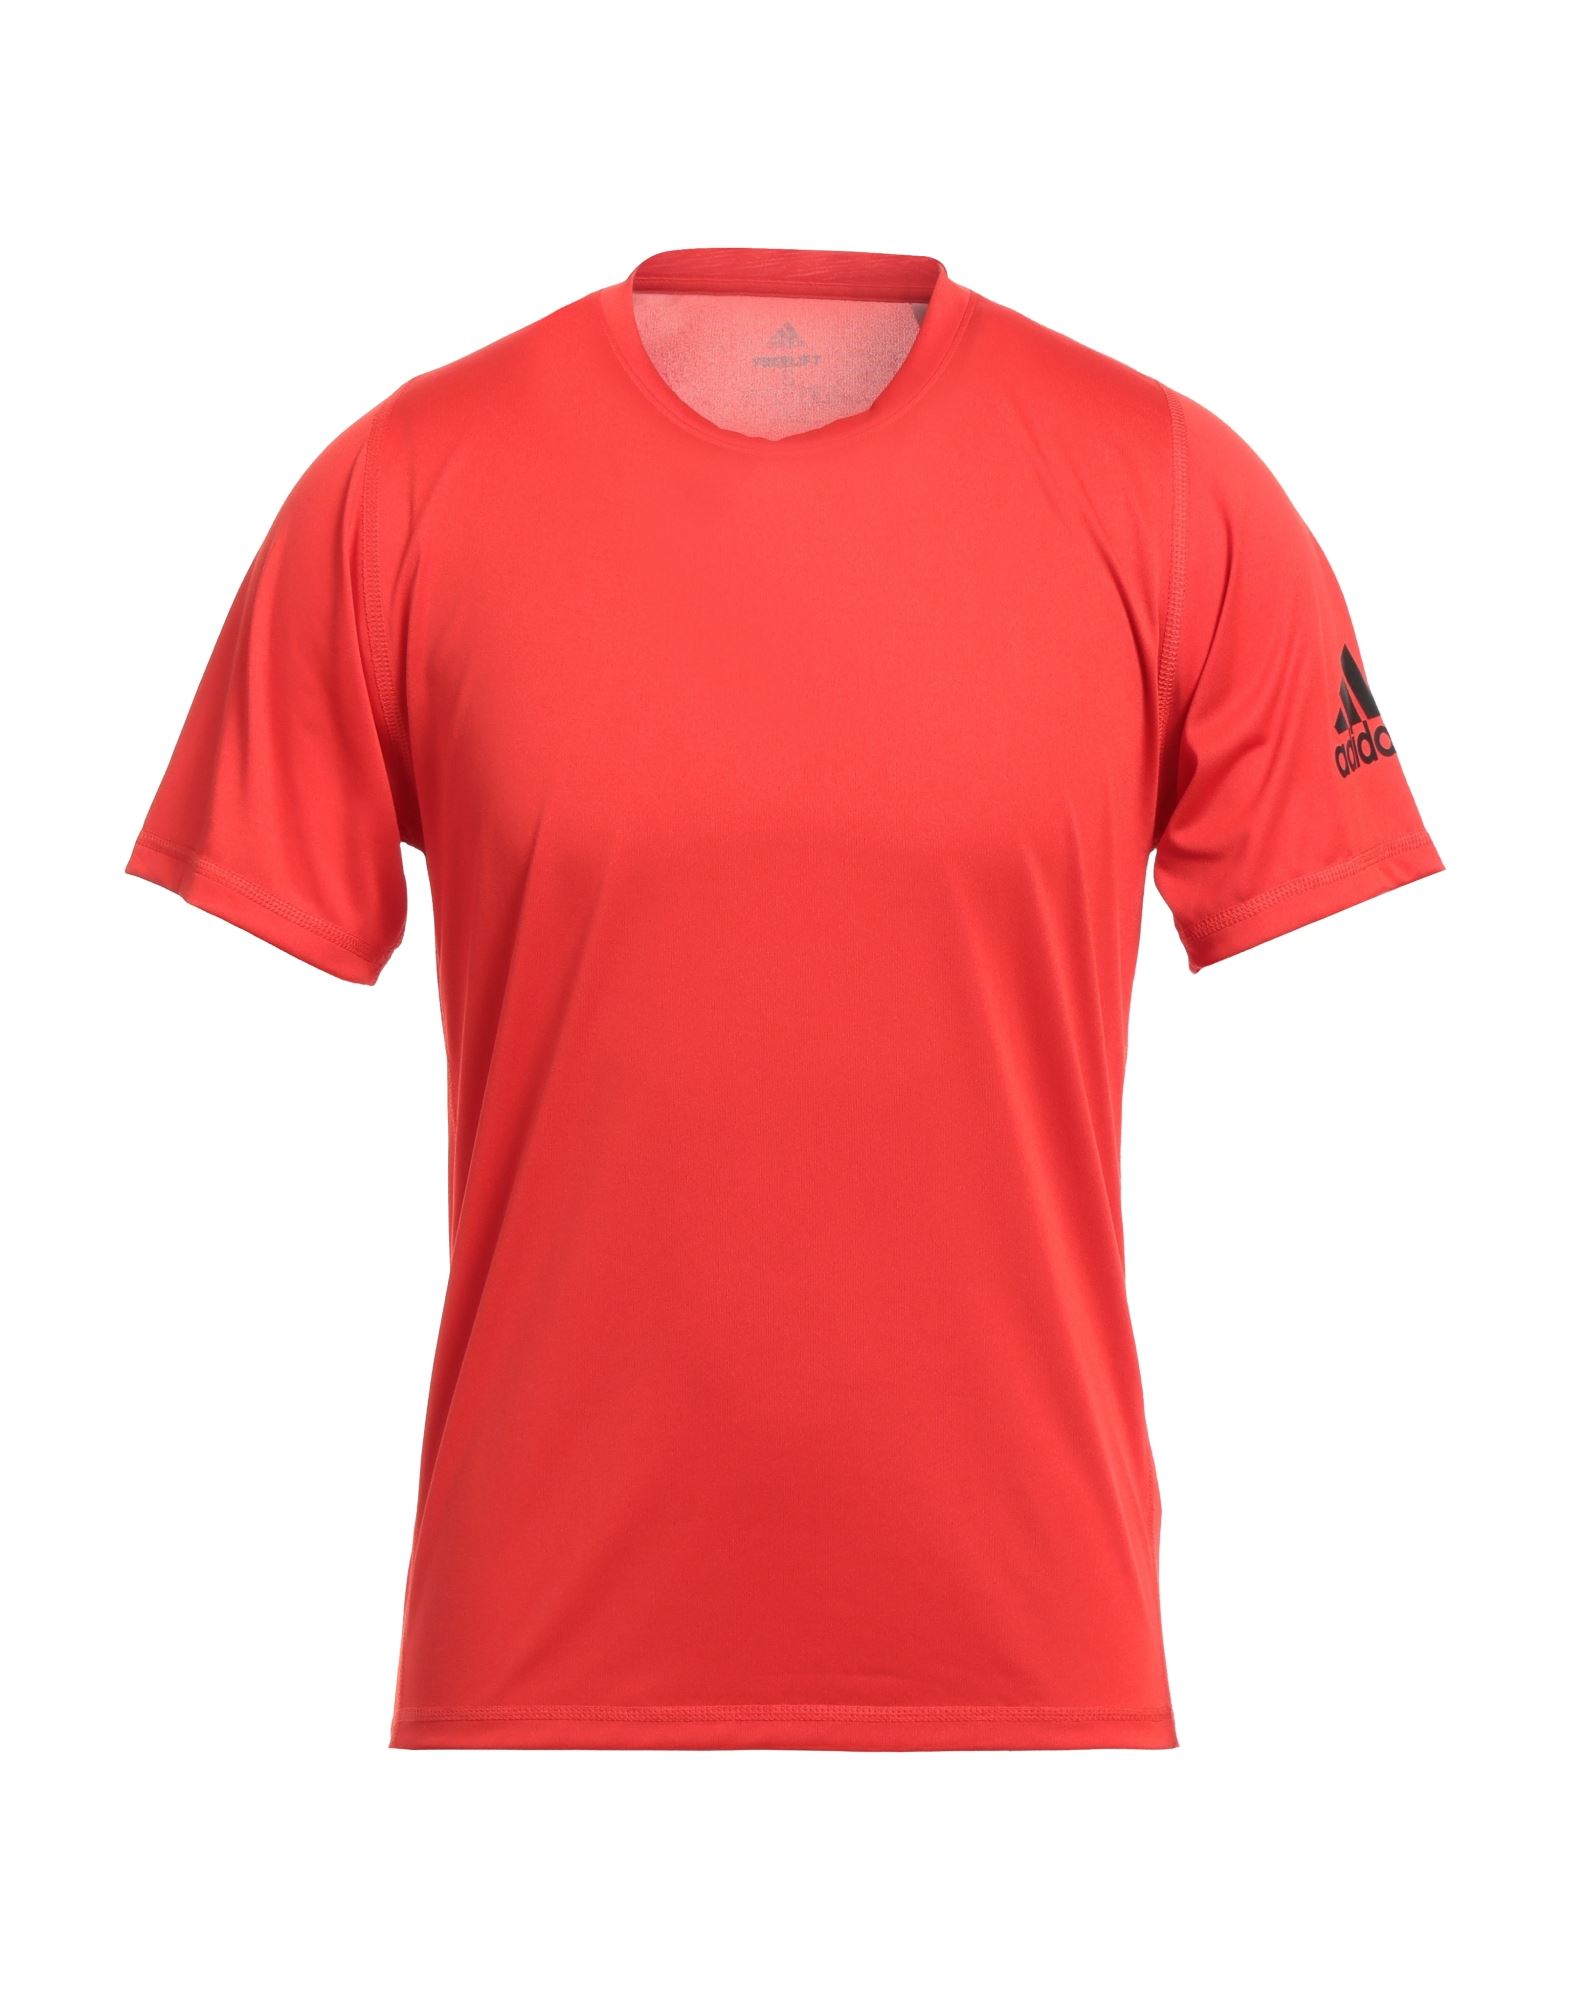 Adidas Originals T-shirts In Red